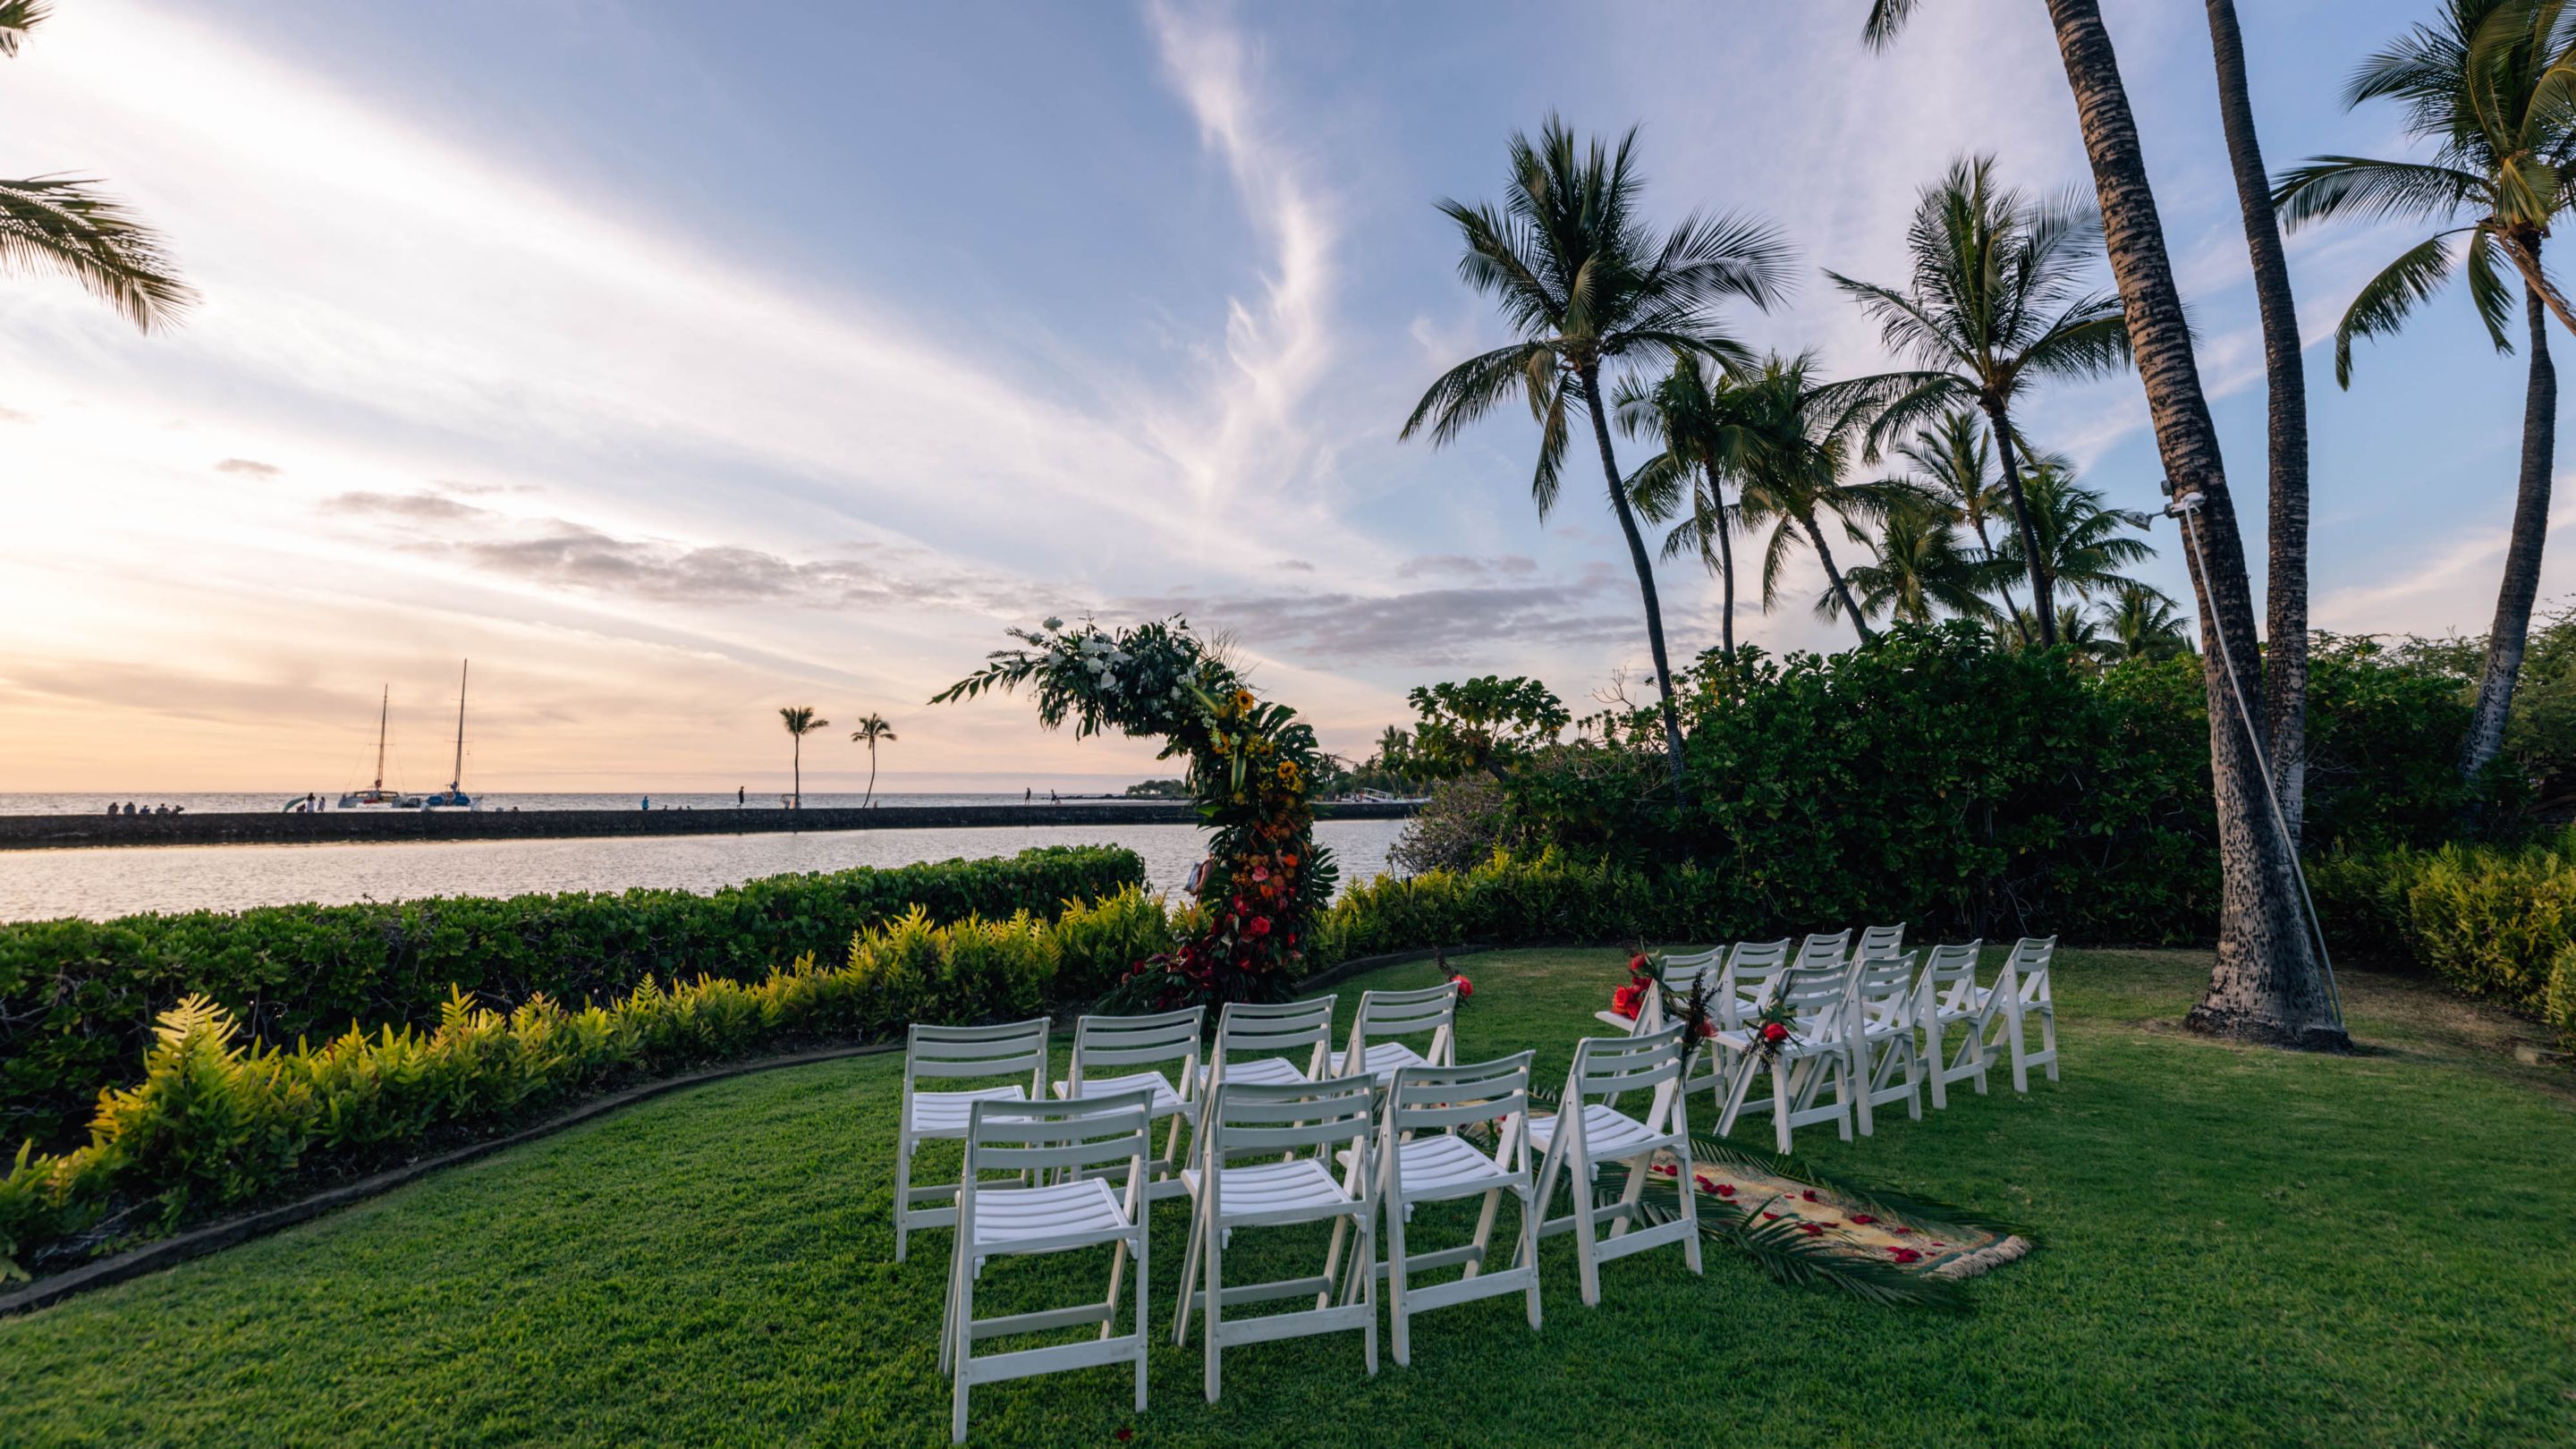 outdoor wedding set, arch, palm trees, ocean